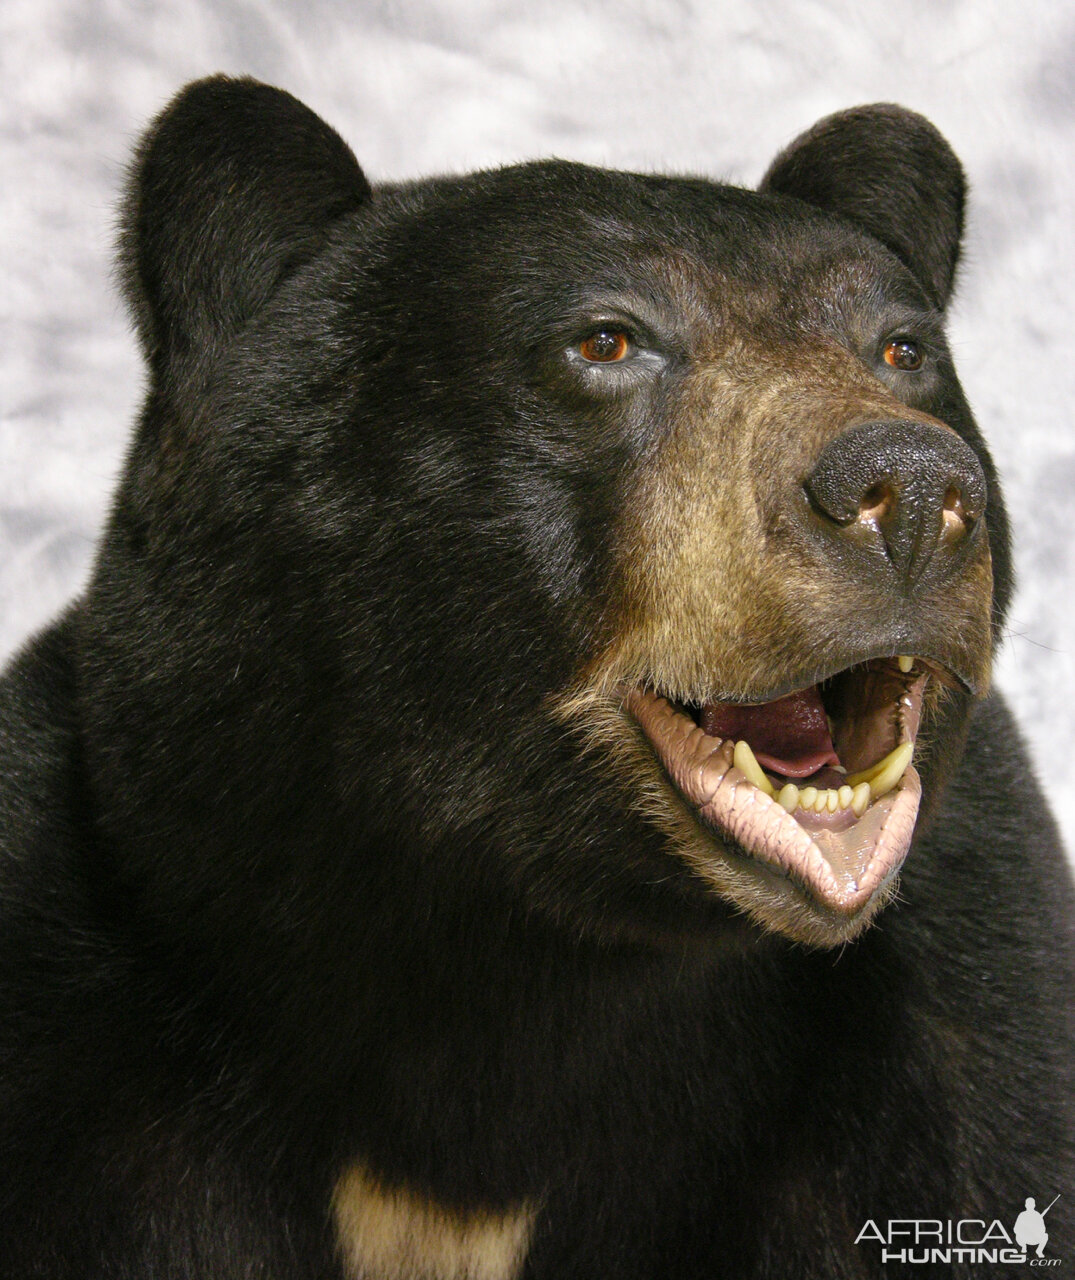 Black Bear Full Mount Taxidermy #3